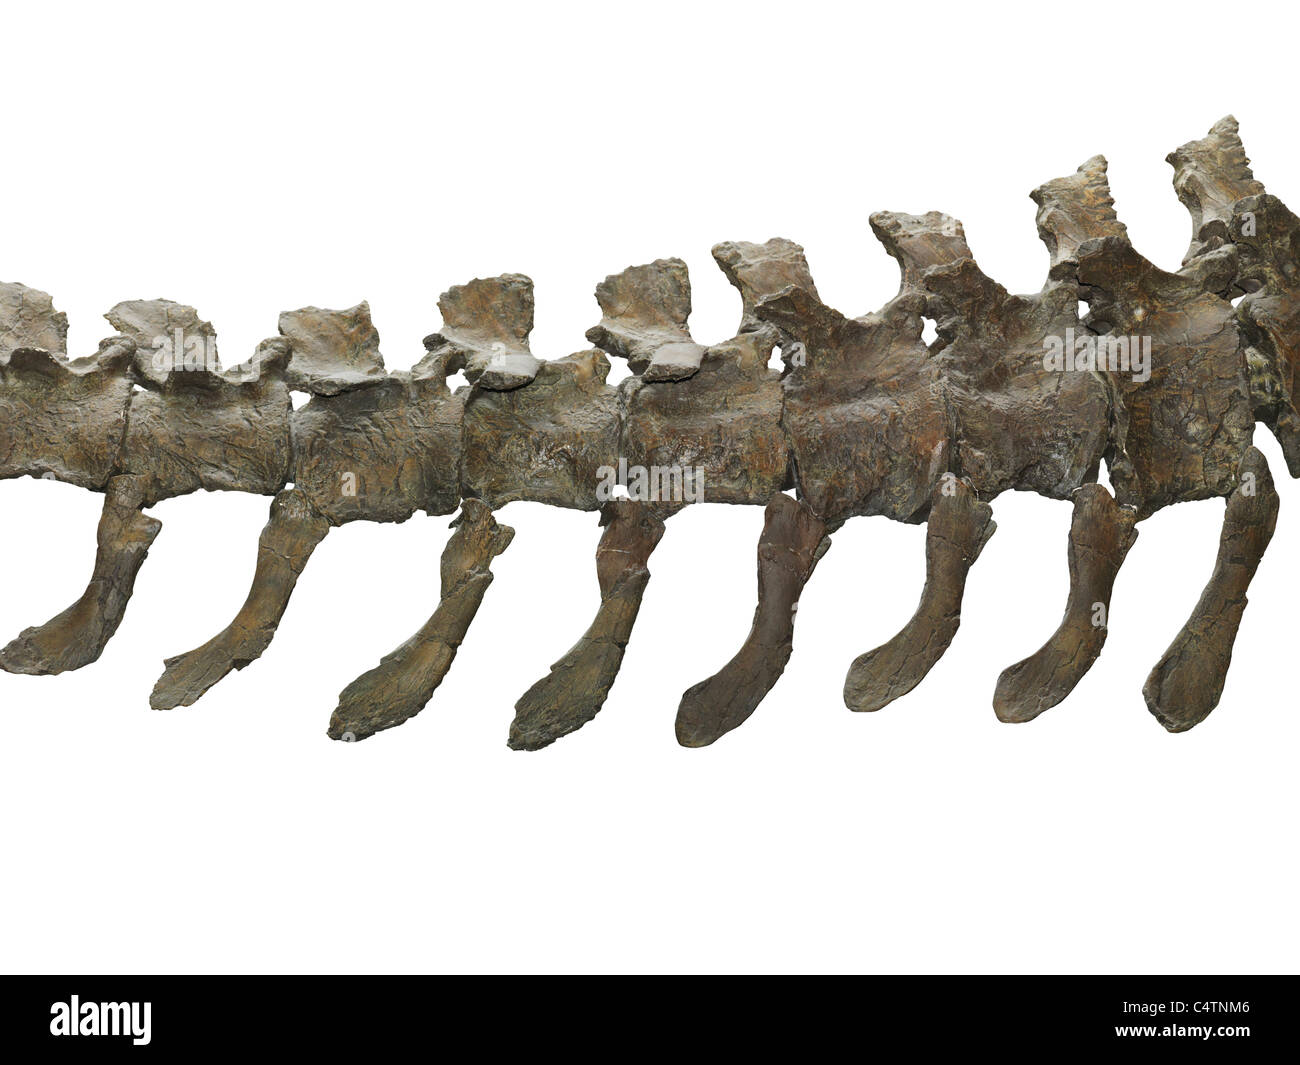 Brachiosaurus dinosaur caudal tail vertebrae isolated with clipping path on white background. Stock Photo